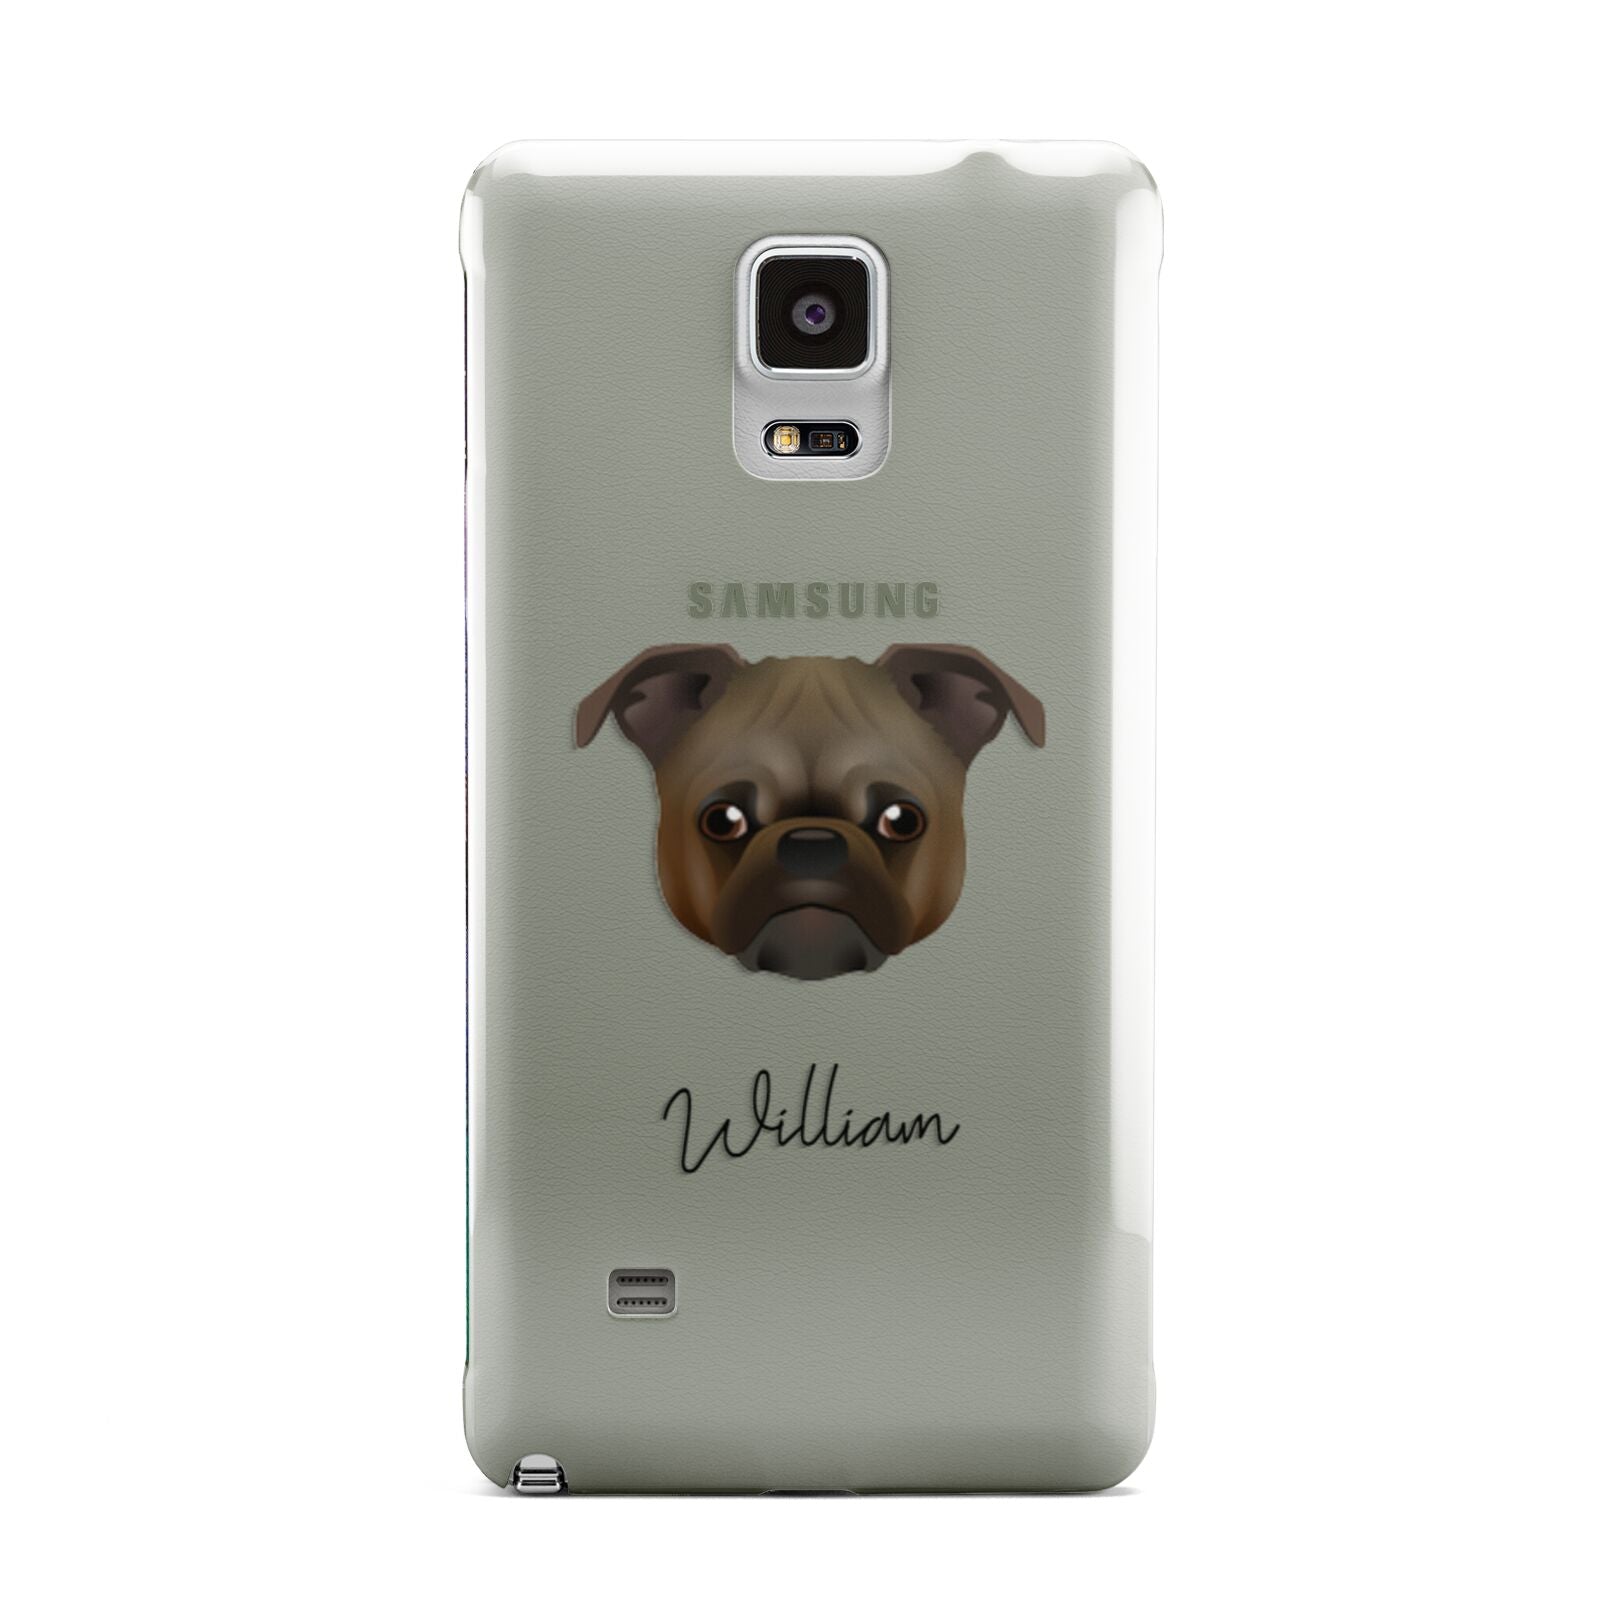 Chug Personalised Samsung Galaxy Note 4 Case